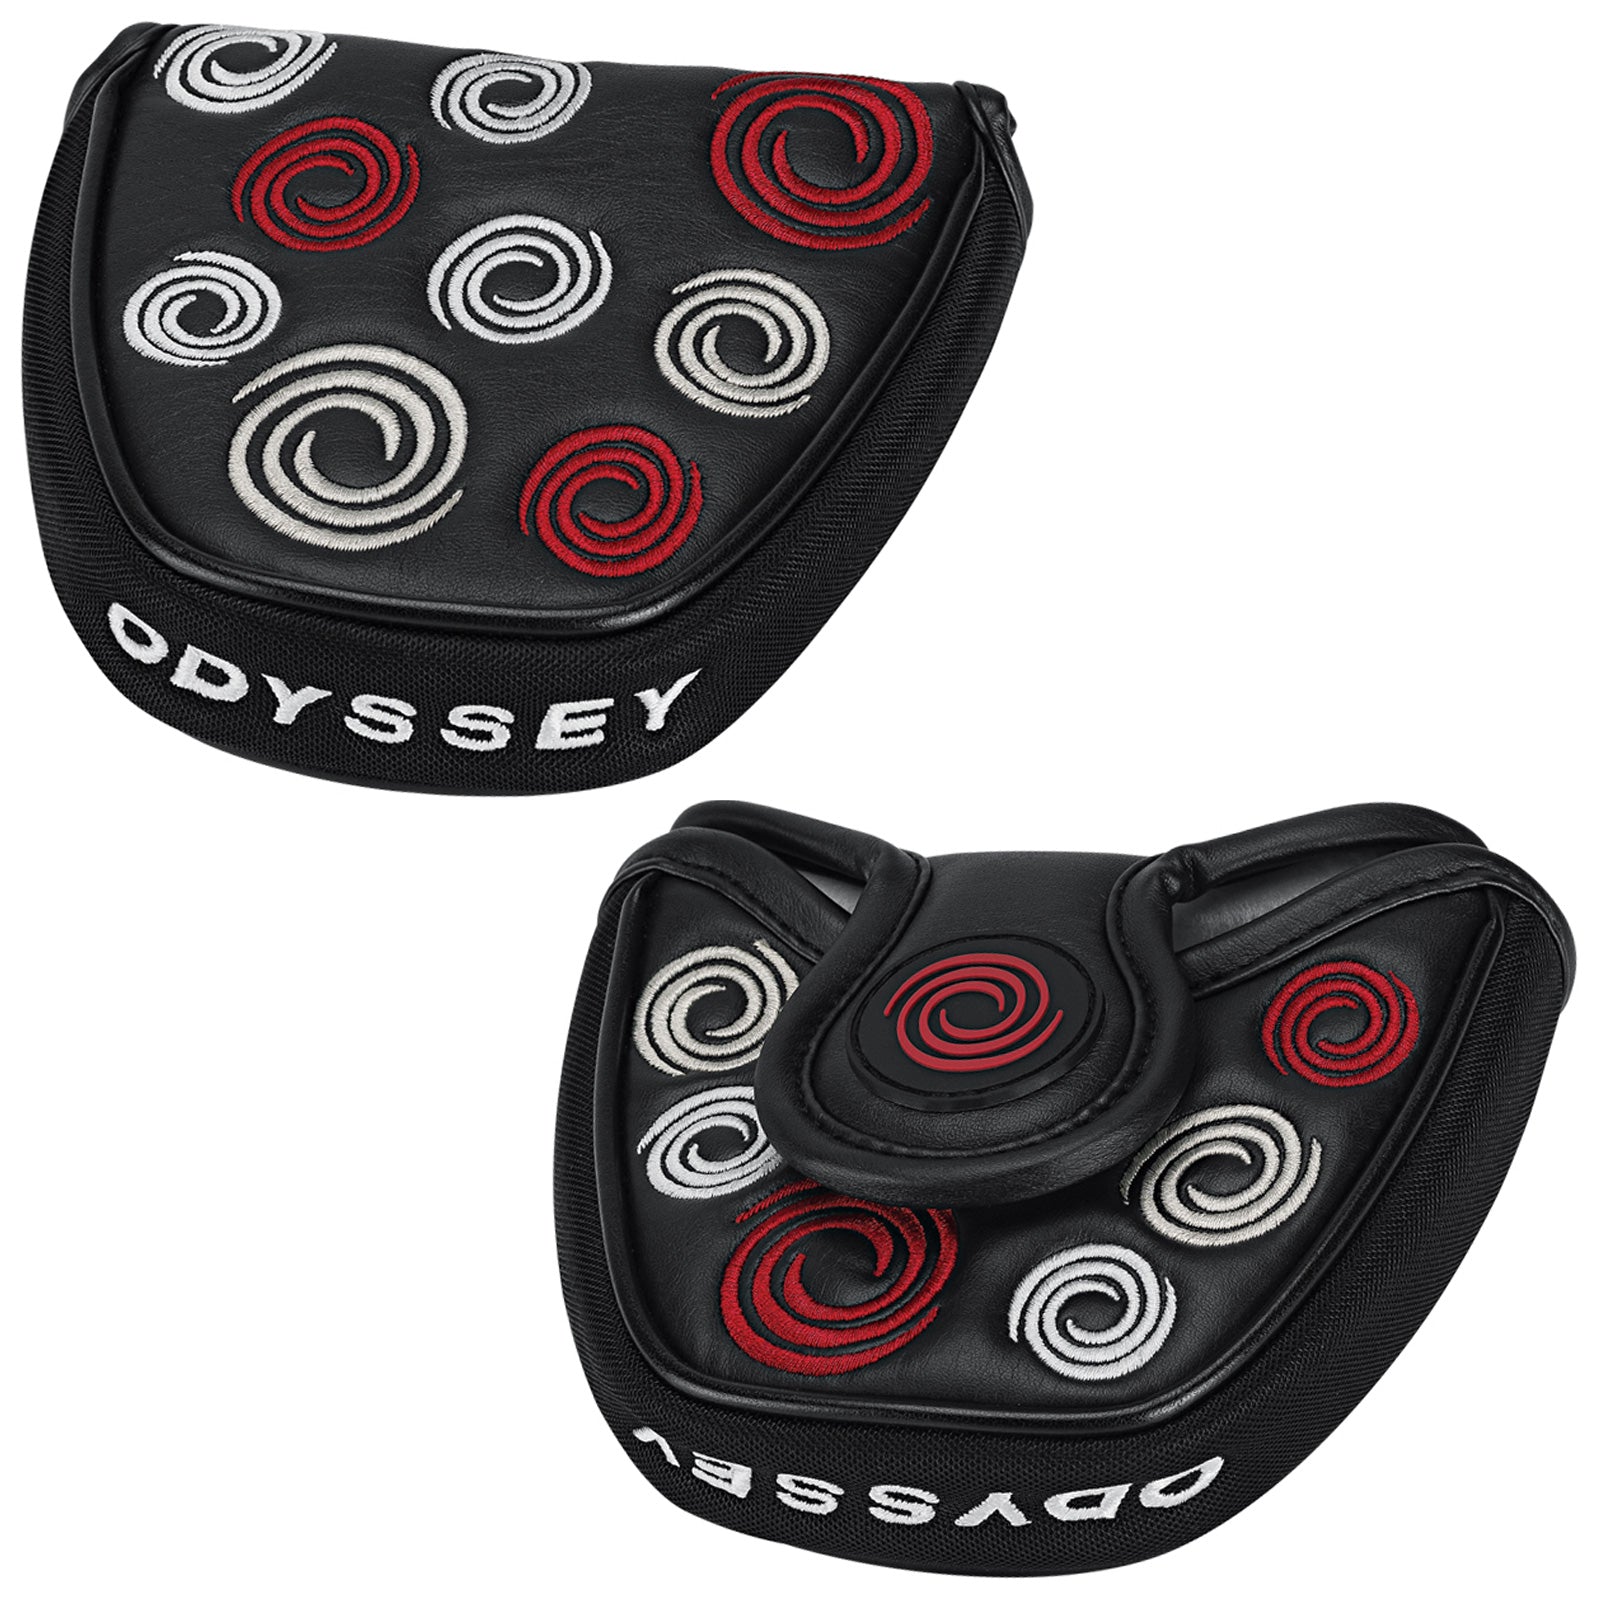 Odyssey Golf Putter Headcovers